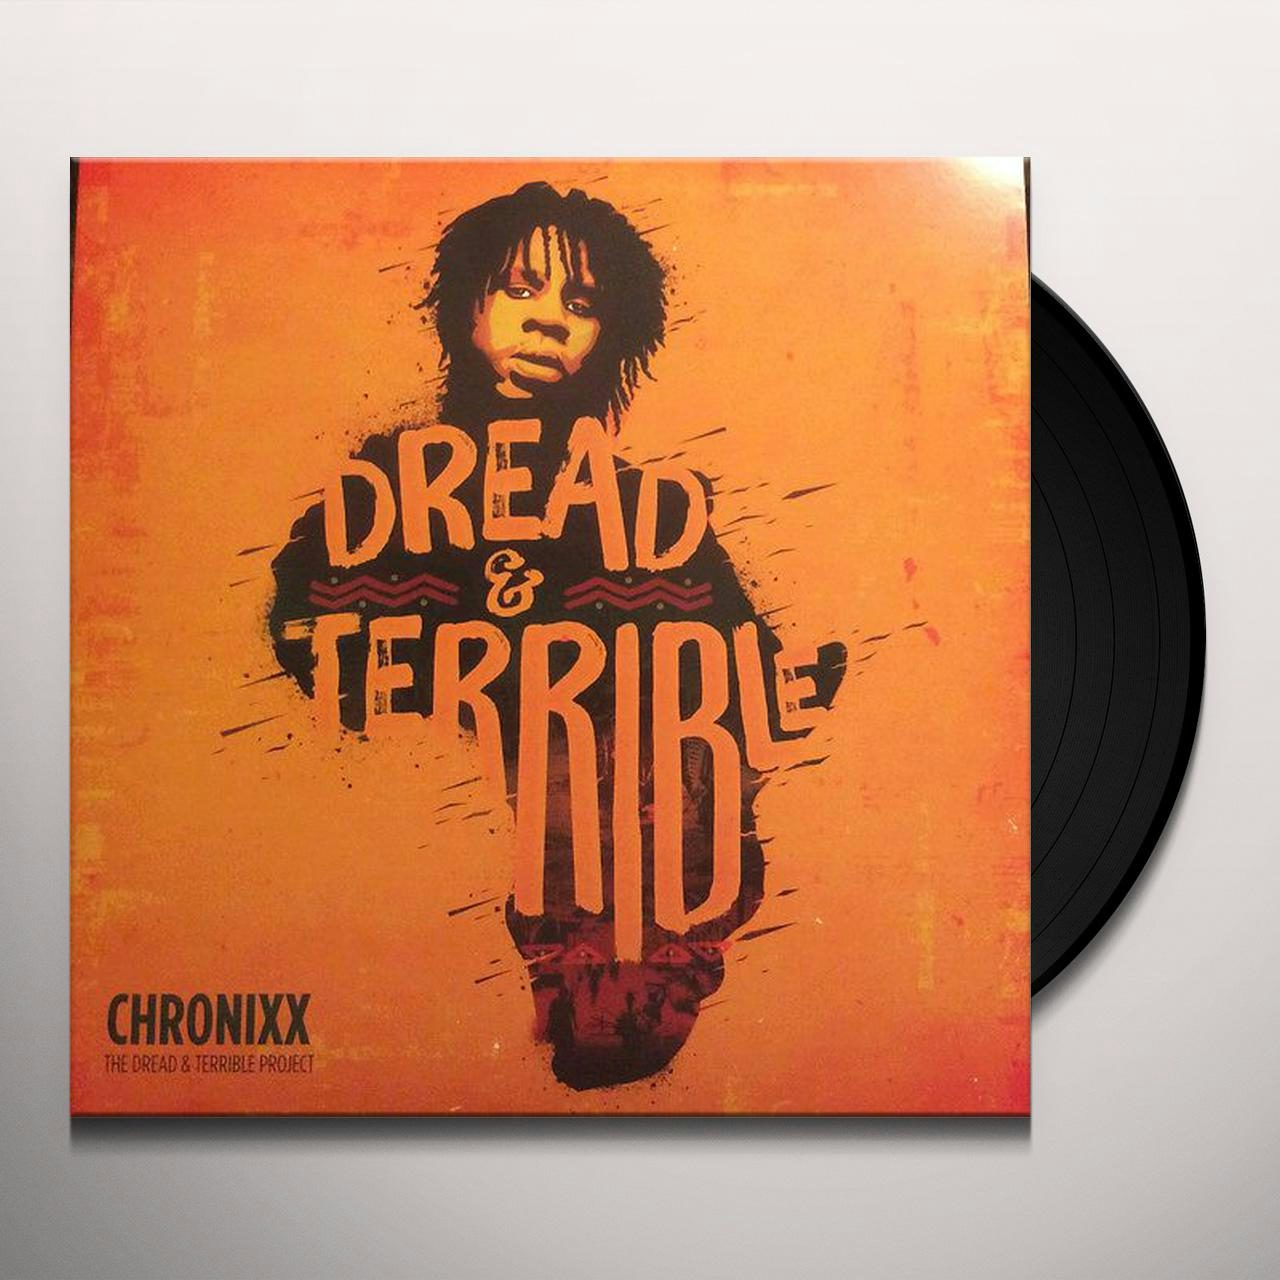 Chronixx Store: Official Merch & Vinyl